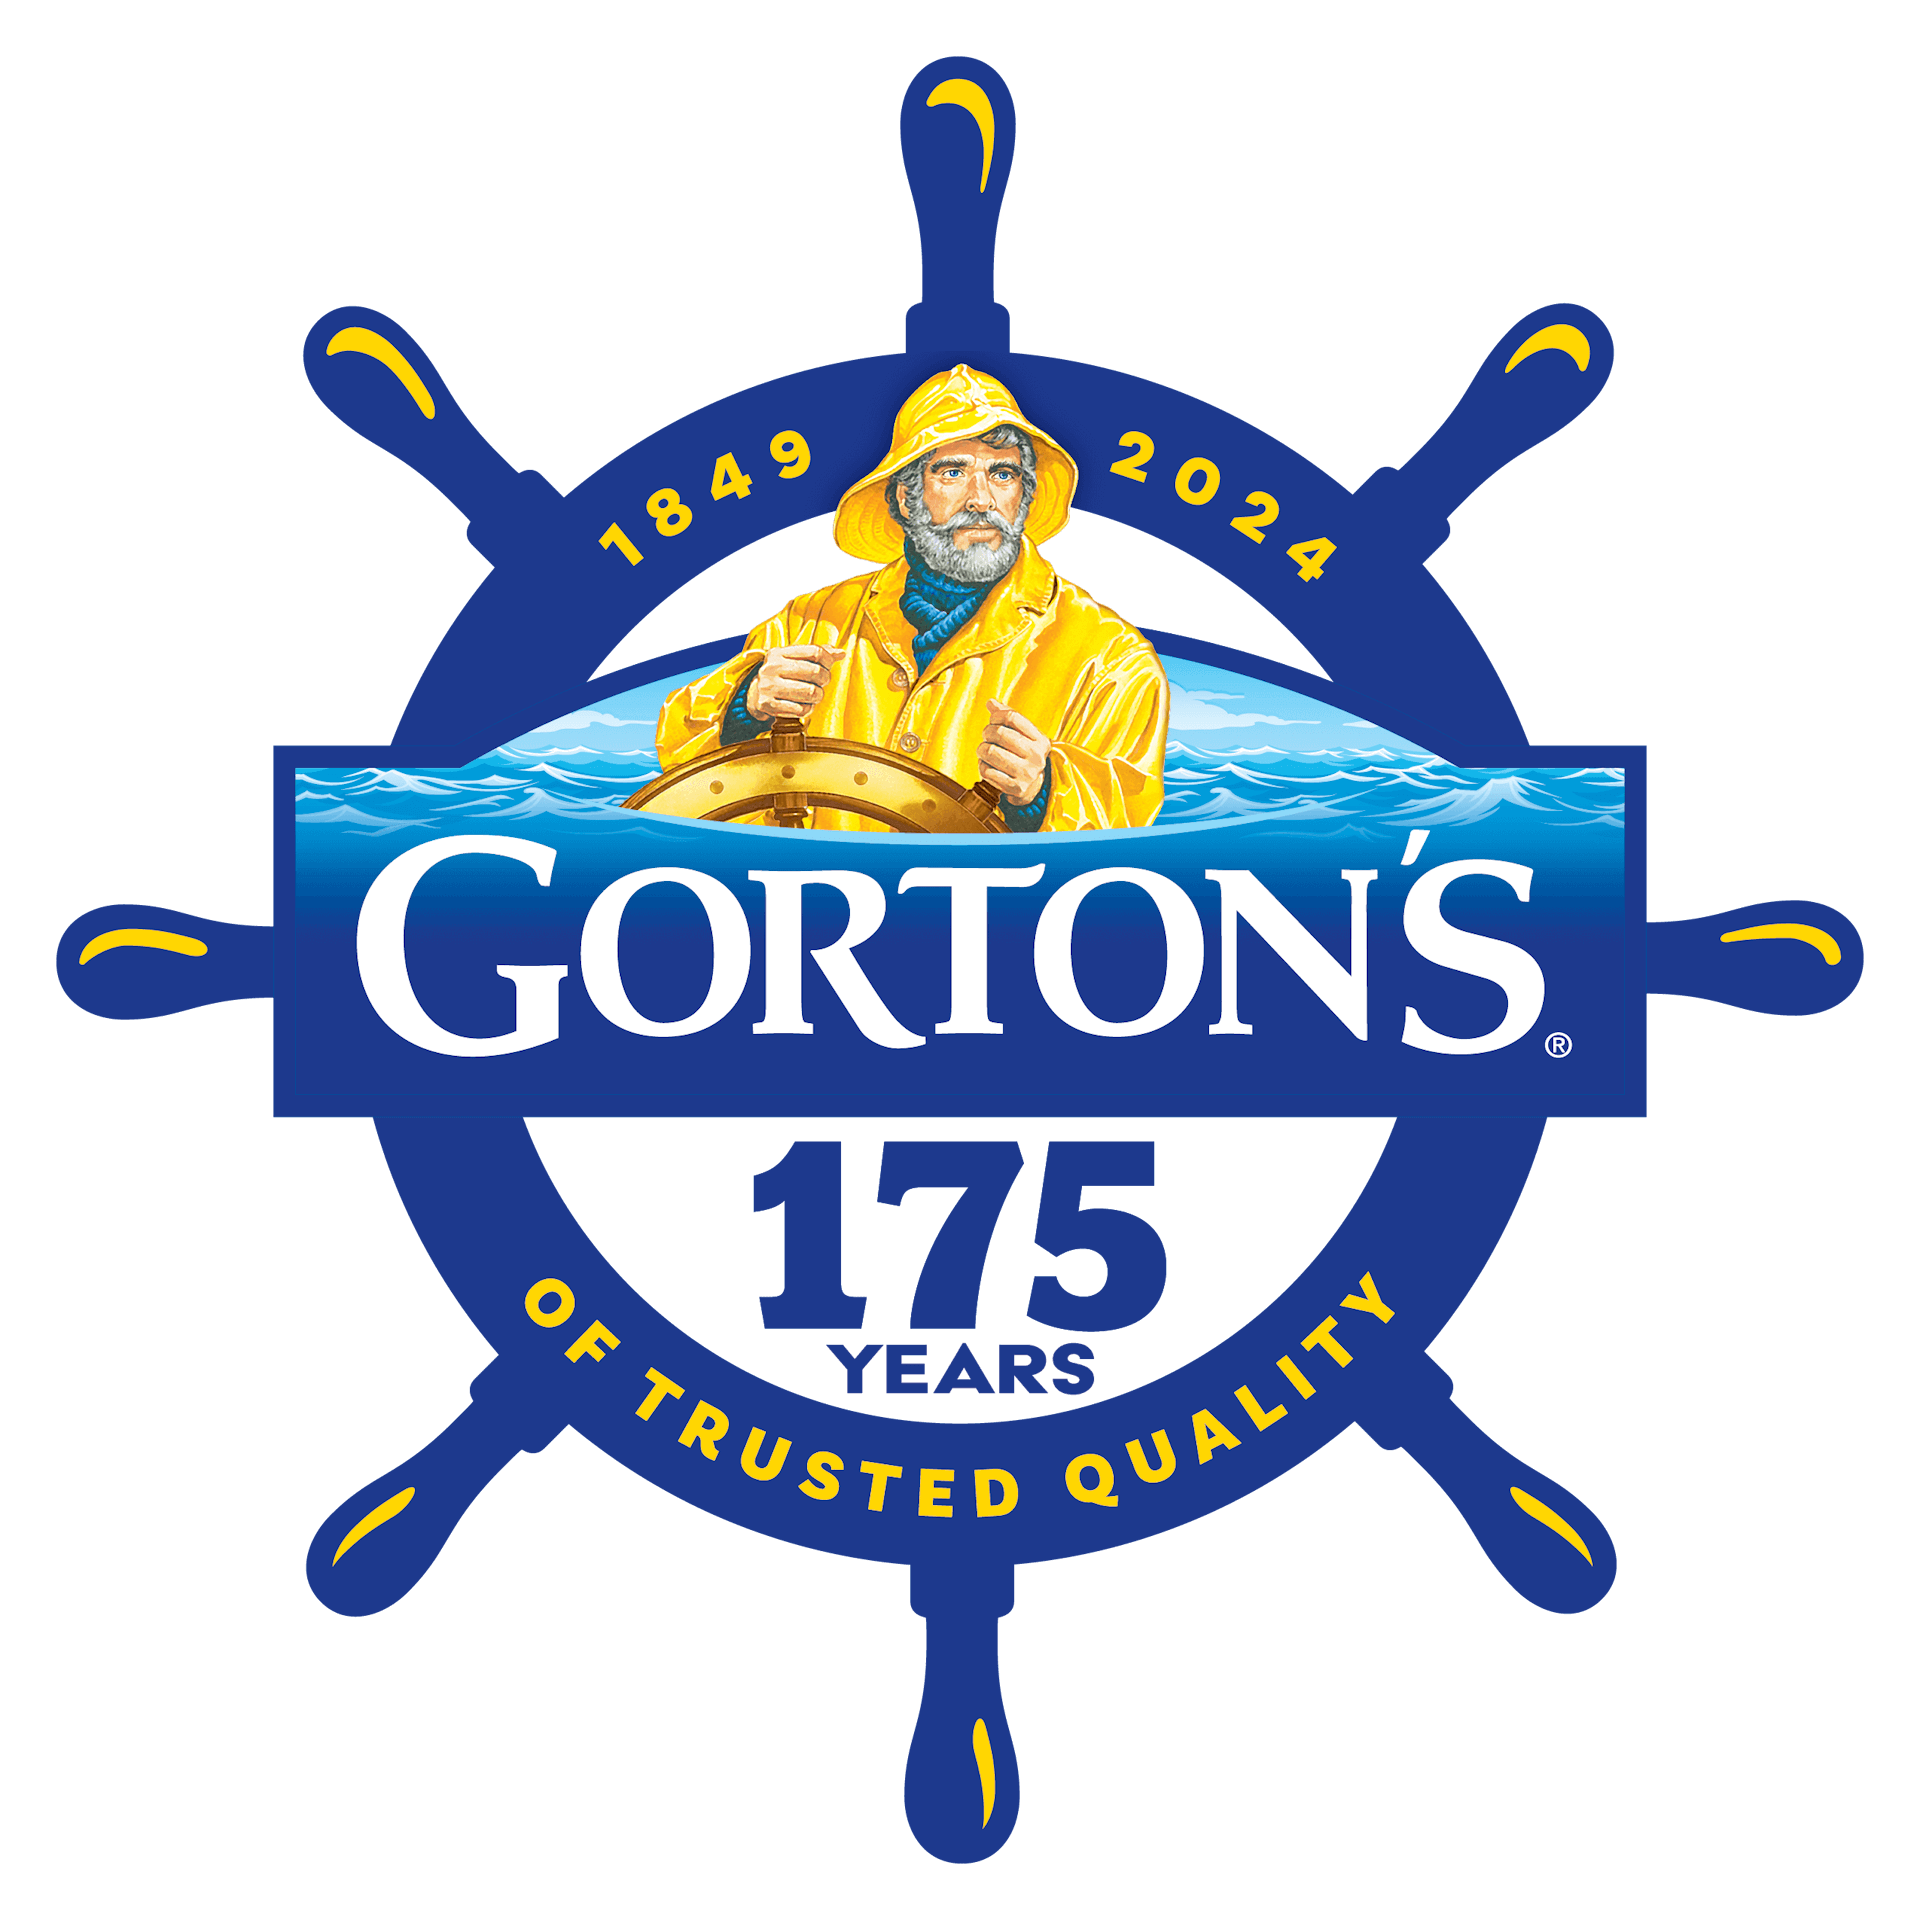 Gorton's Seafood